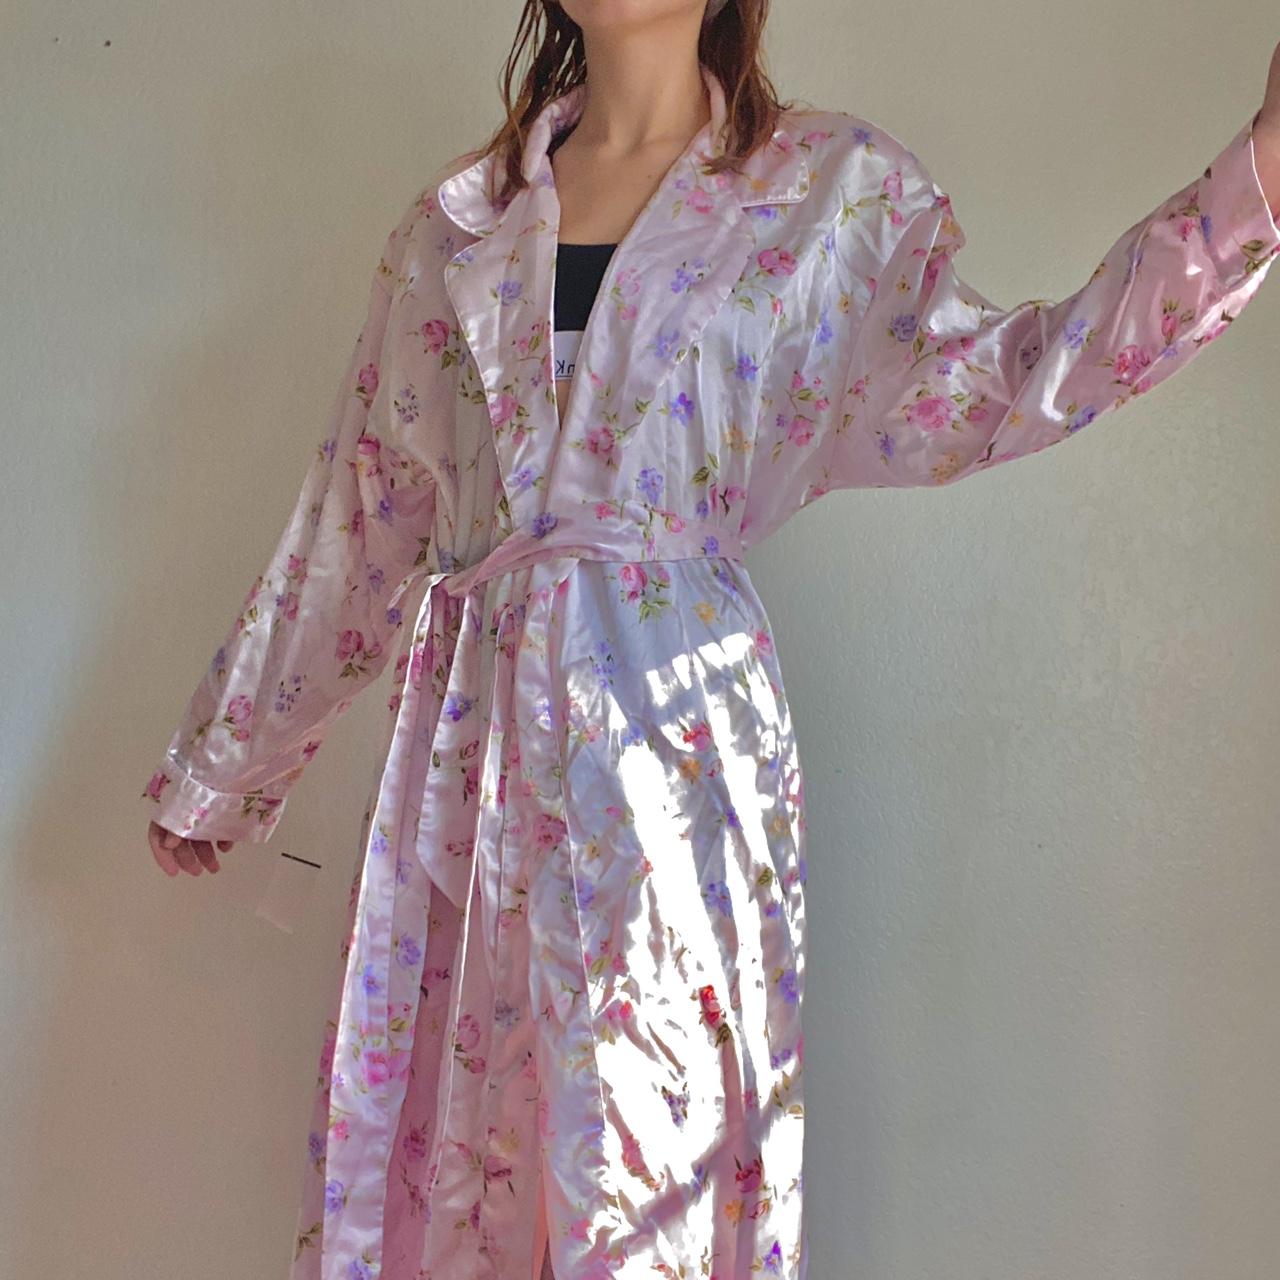 Product Image 3 - Pink floral silk robe, sleepwear,